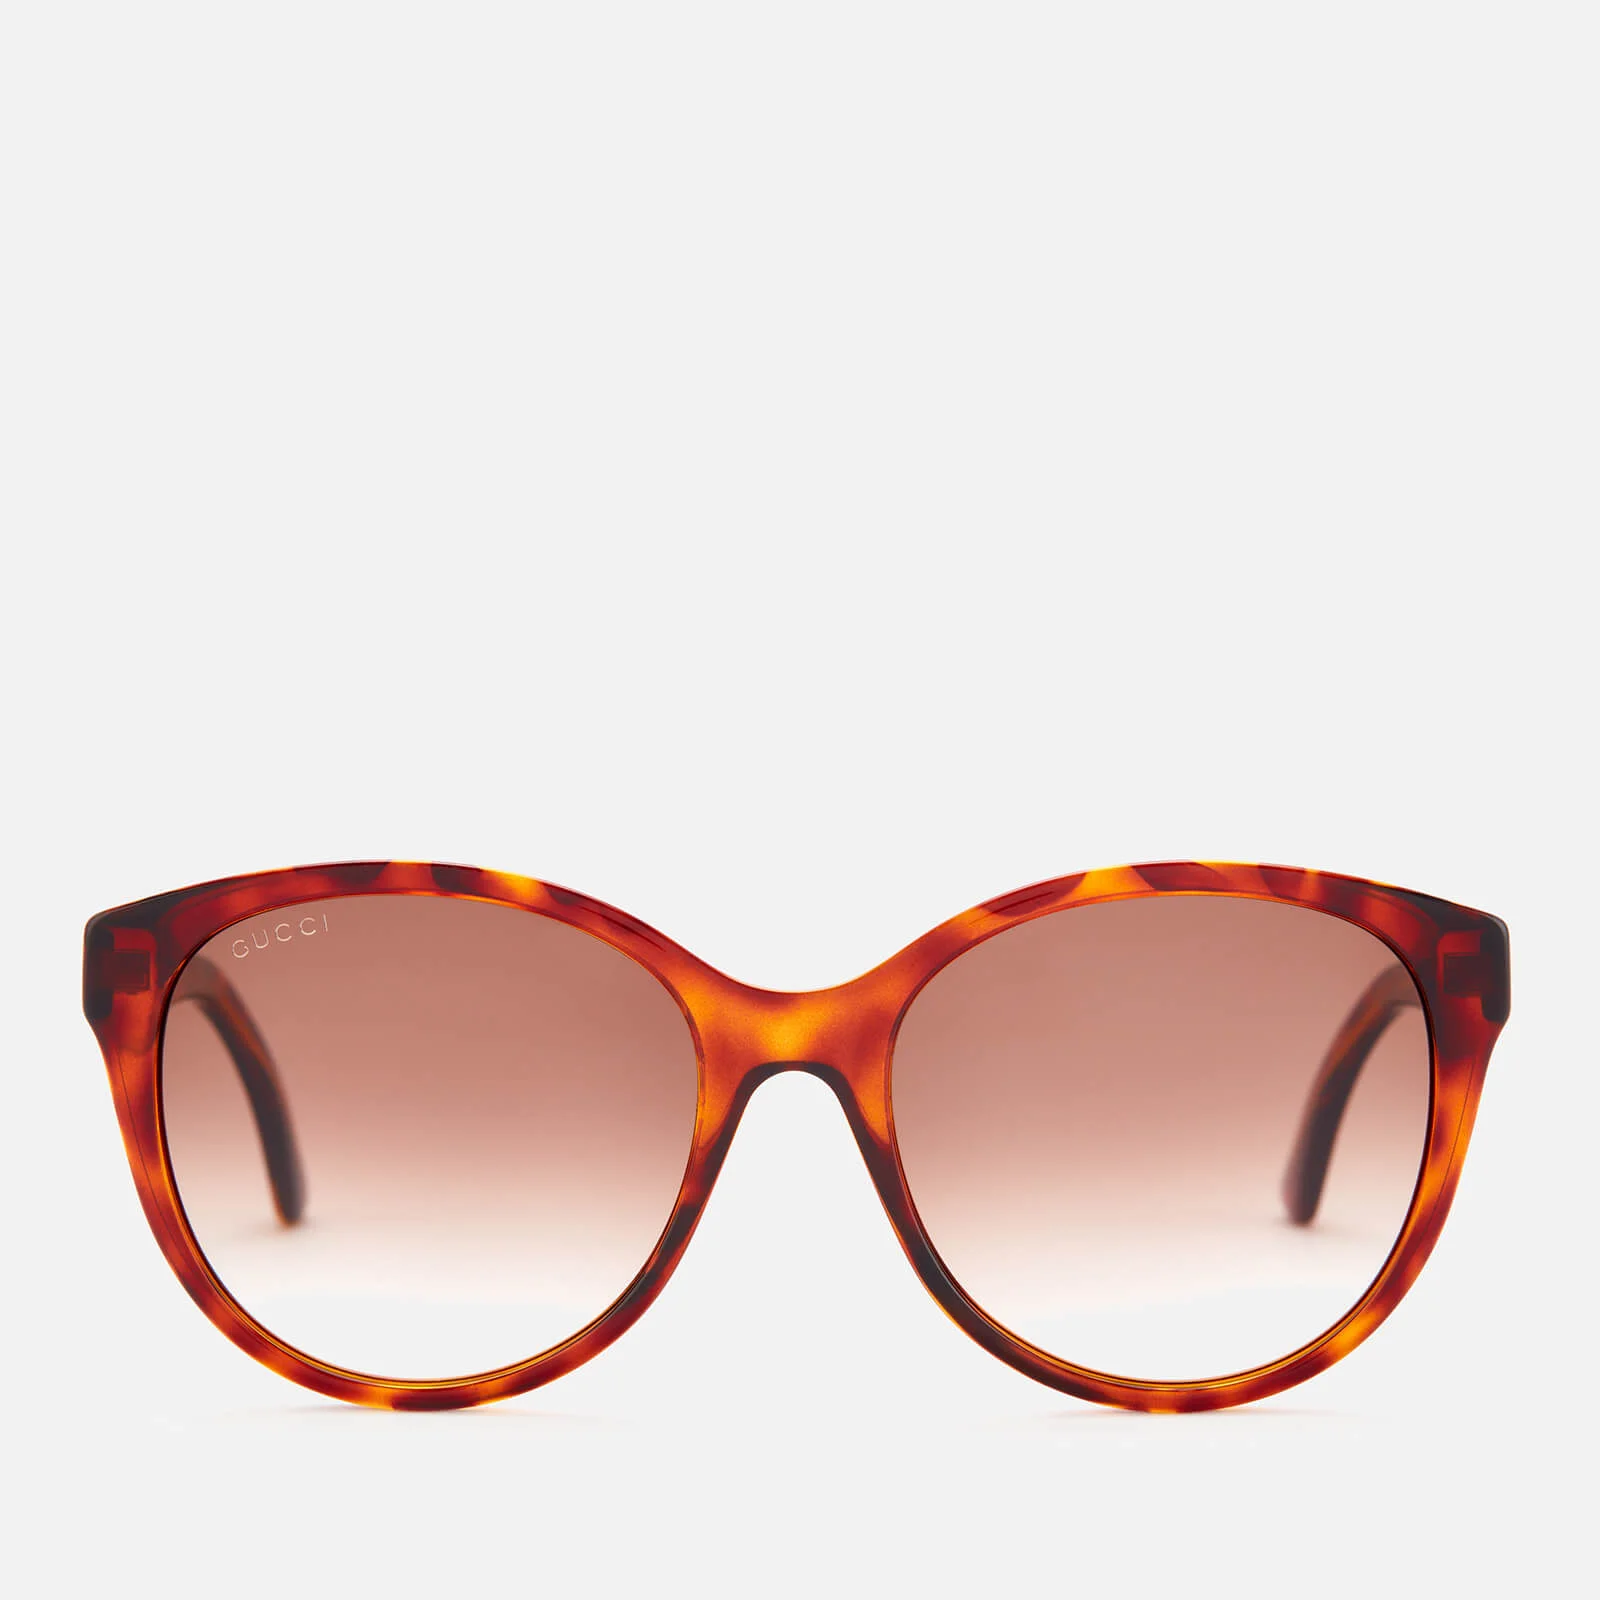 Gucci Women's Oversized Acetate Frame Sunglasses - Havana/Brown Image 1